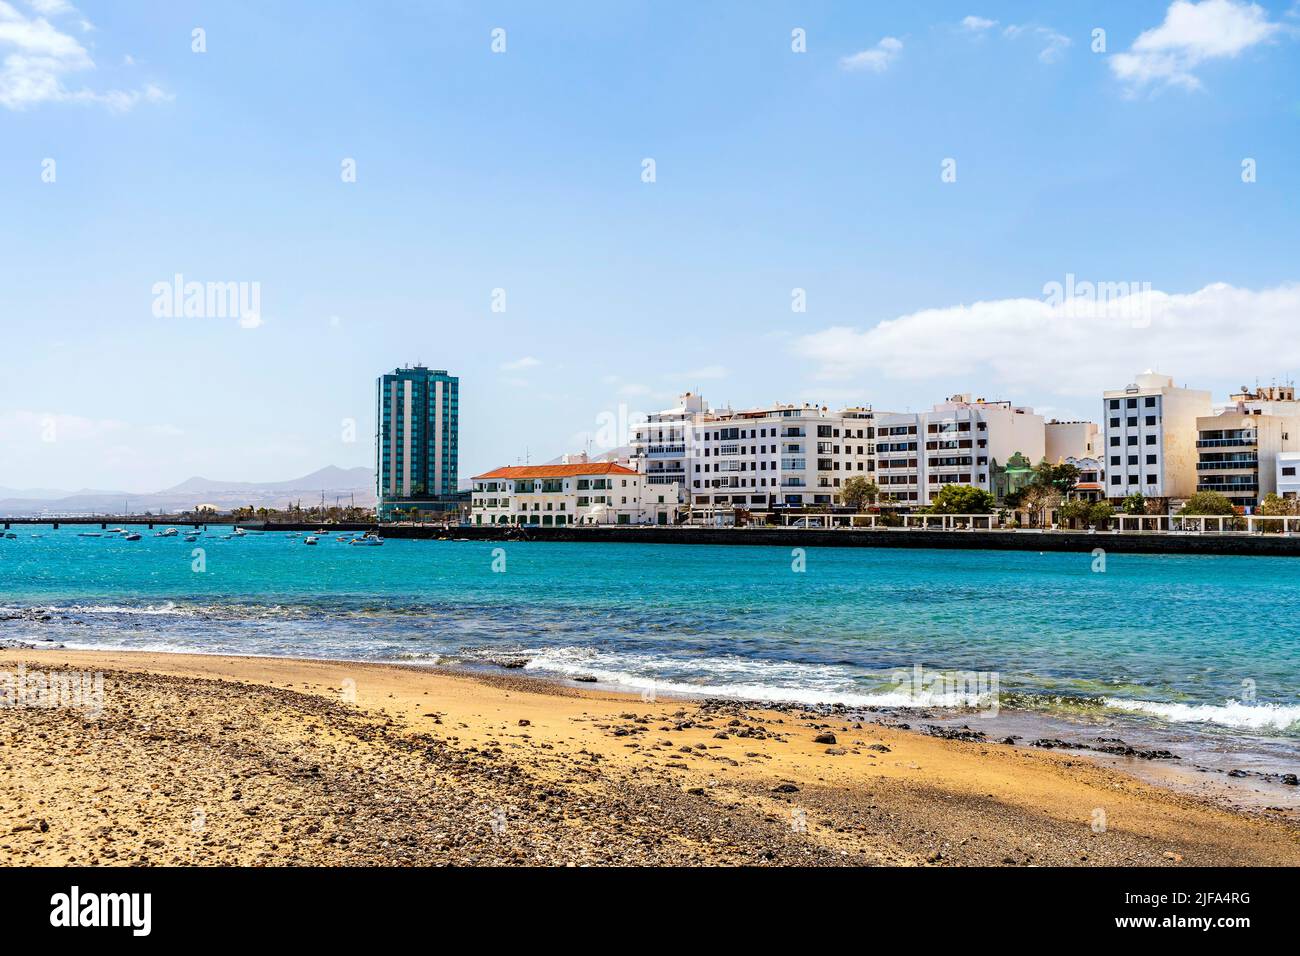 Arrecife cityscape seen from San Gabriel castle, capital city of Lanzarote, Canary Islands, Spain Stock Photo